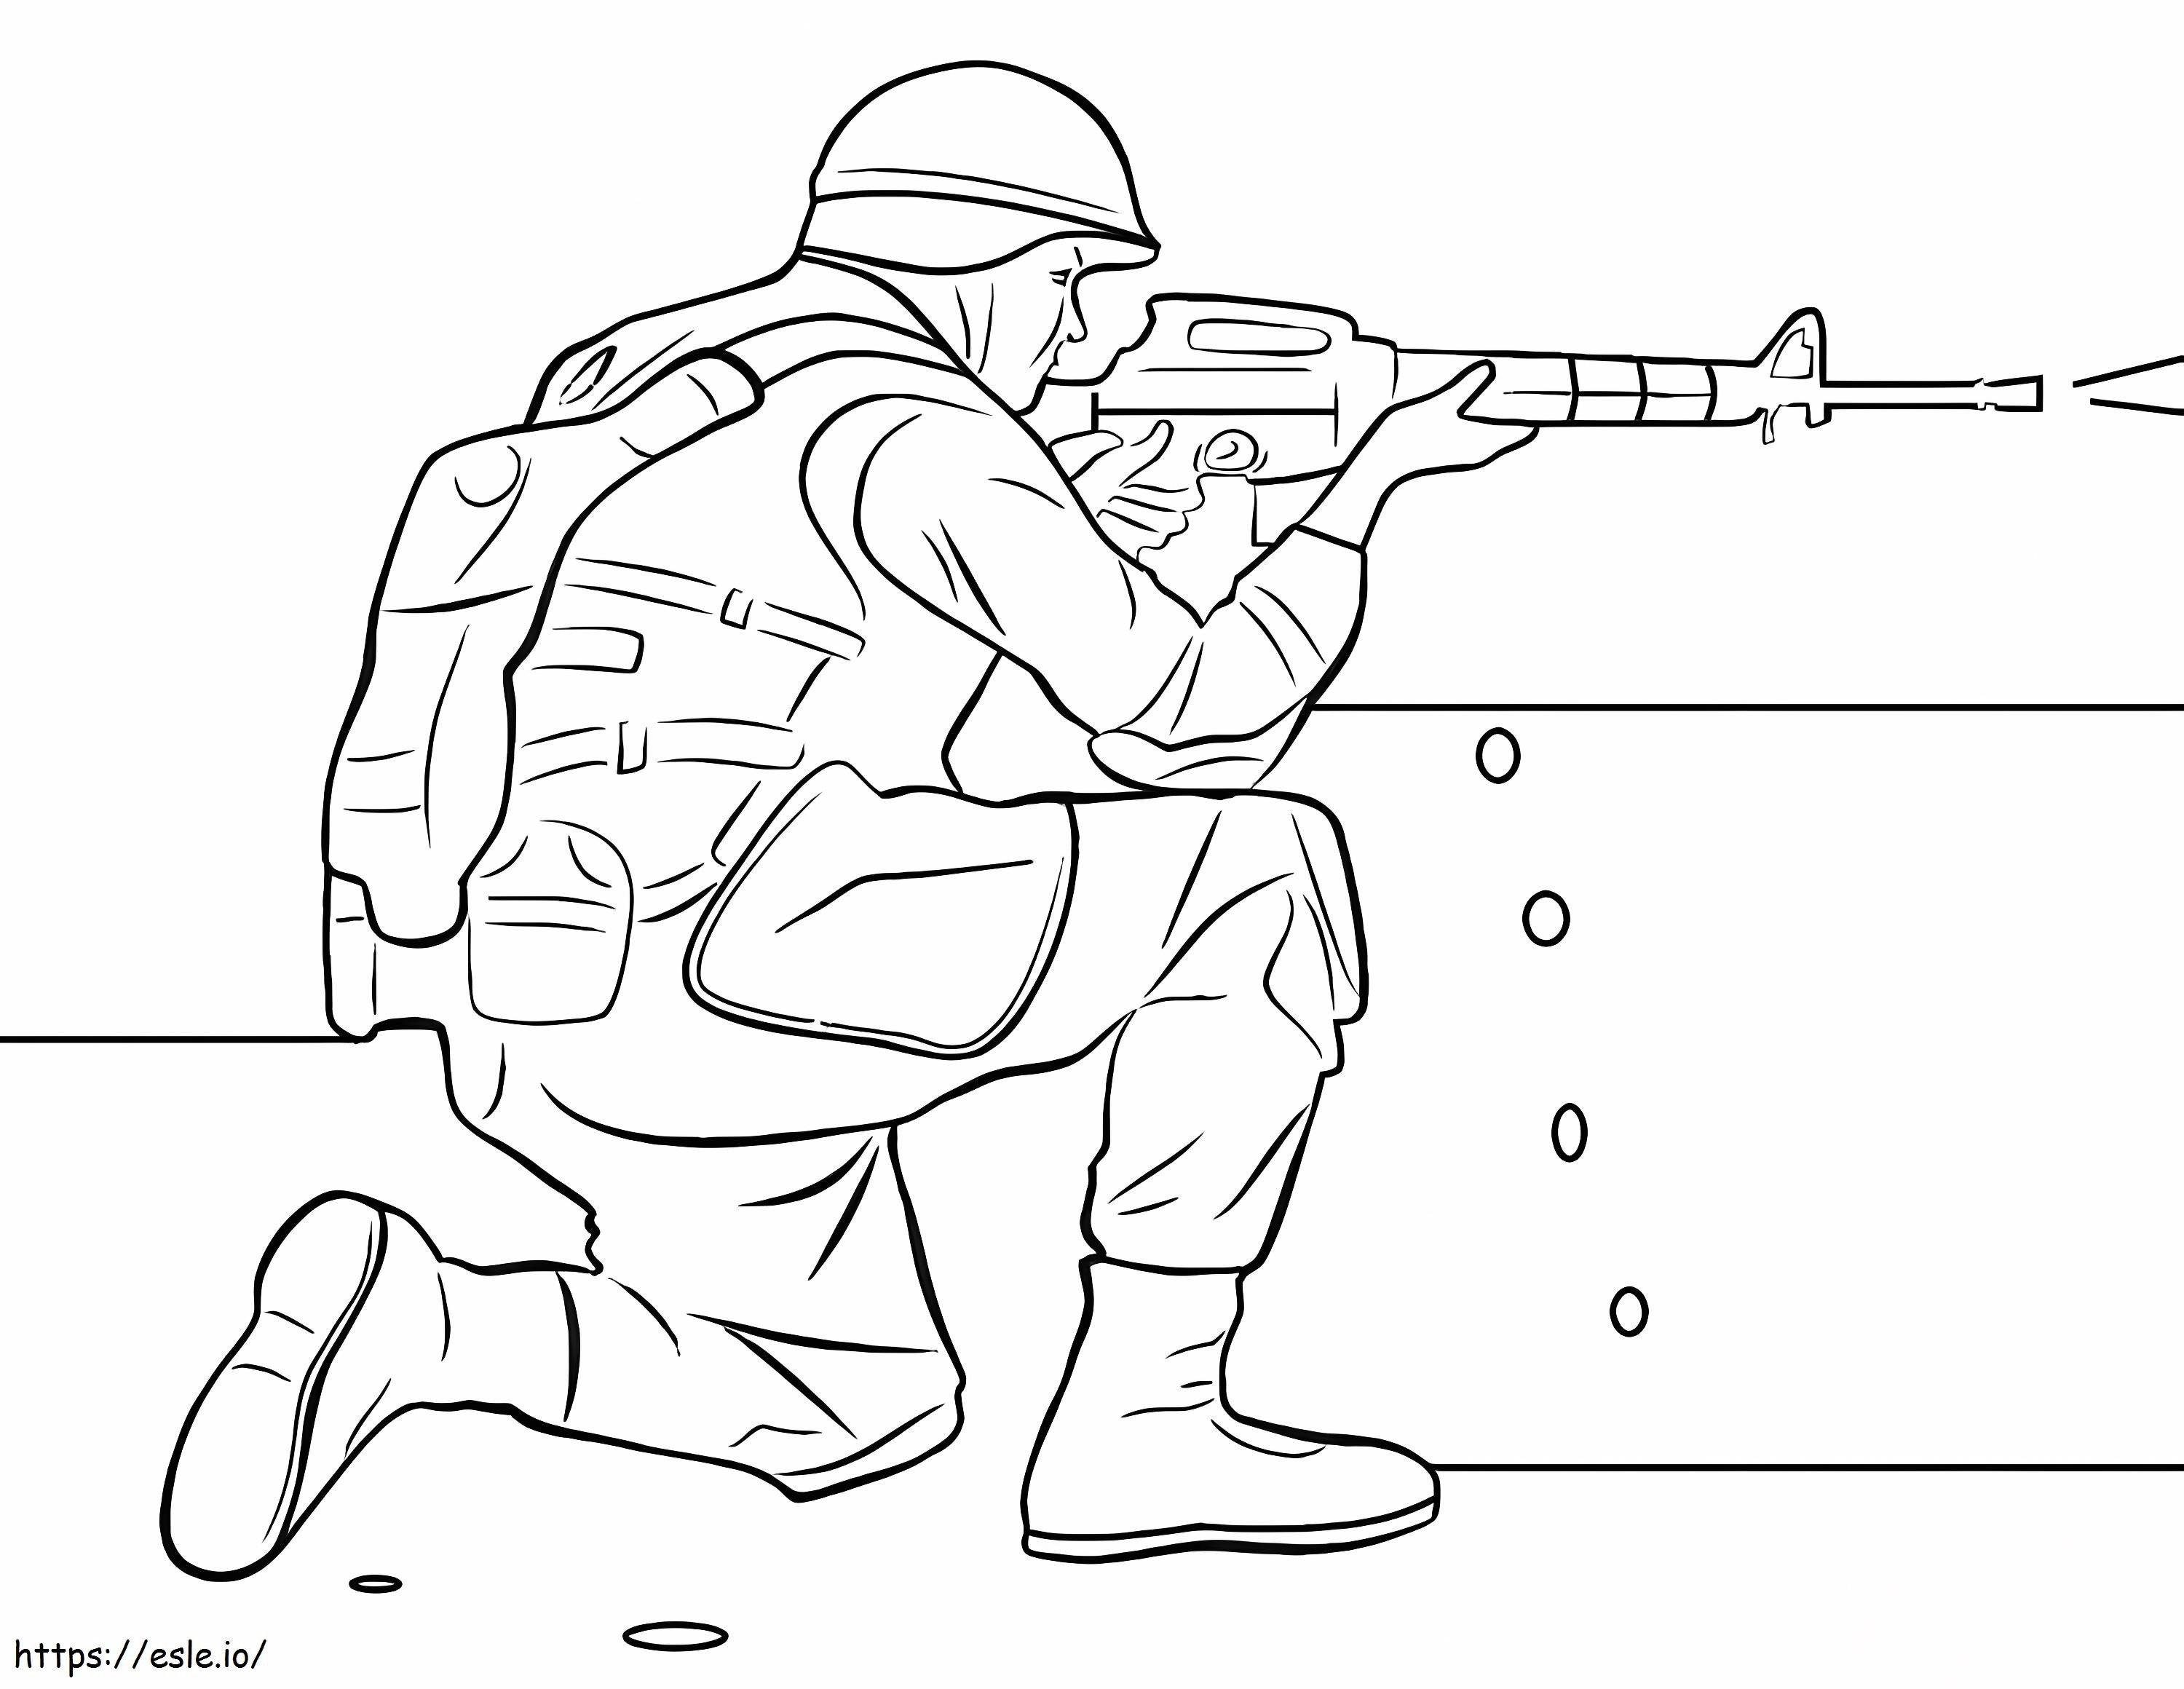 Desenhos para colorir do exército para colorir